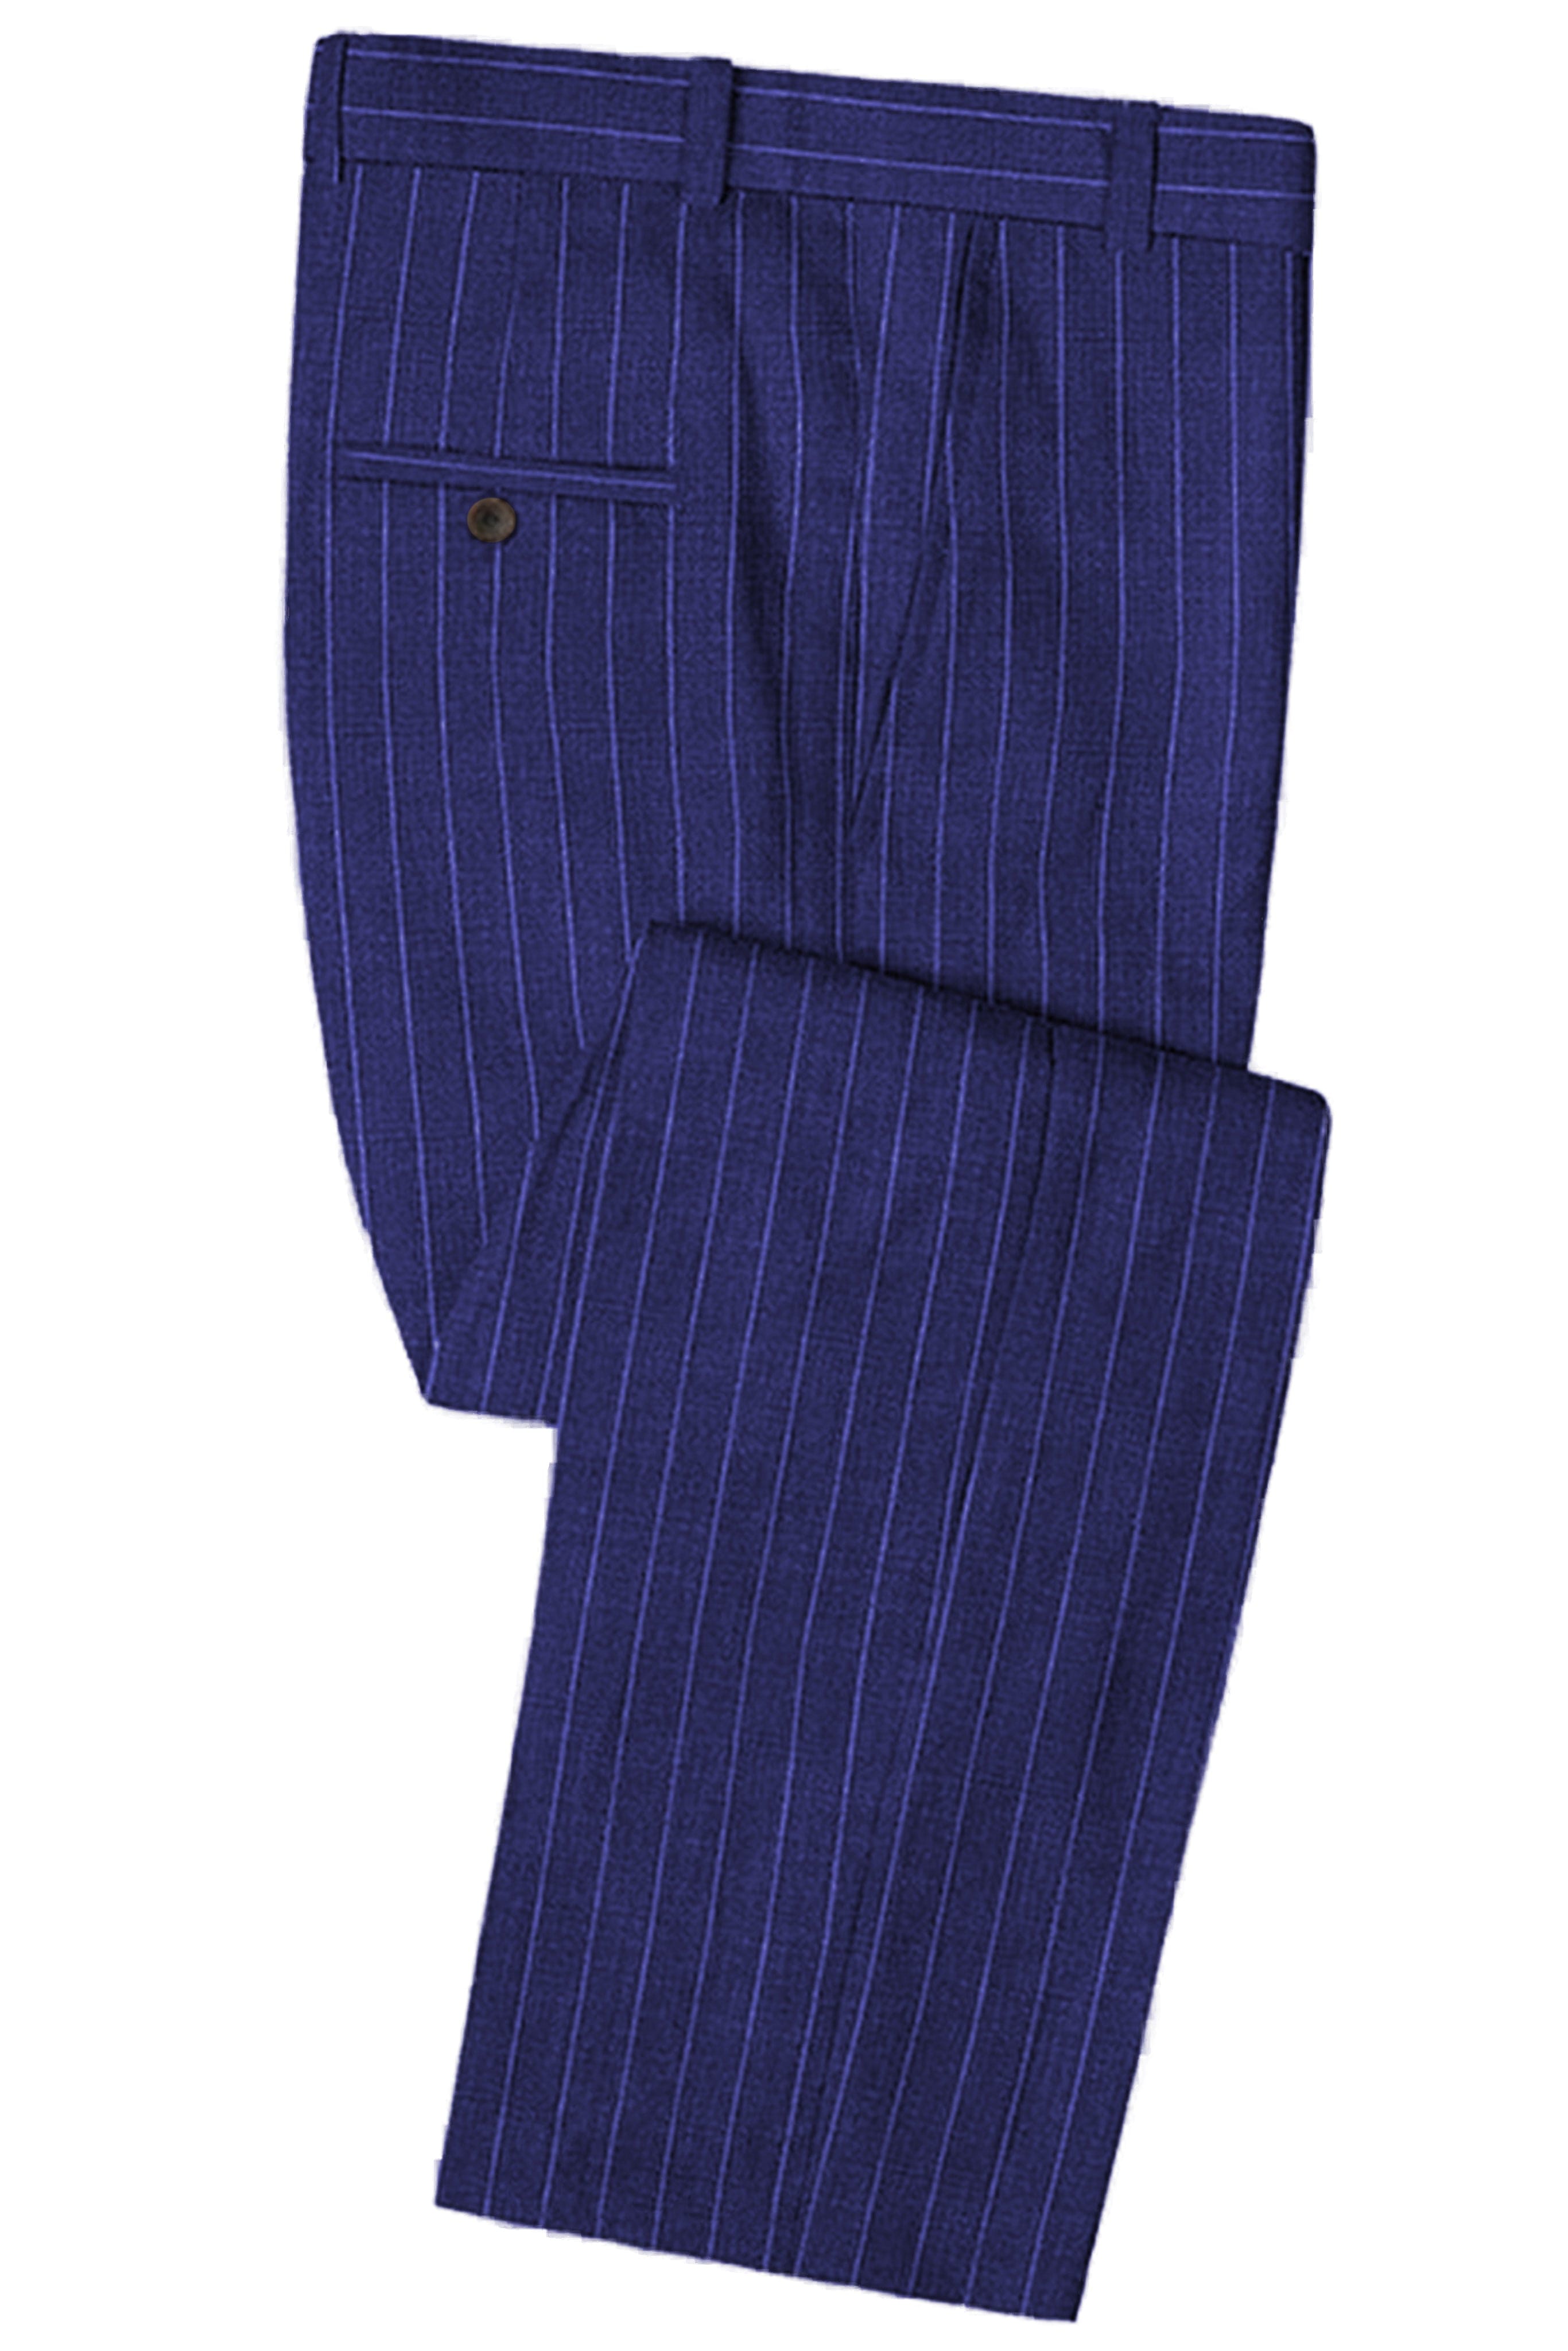 aesido Men's Business Casual Striped Pants